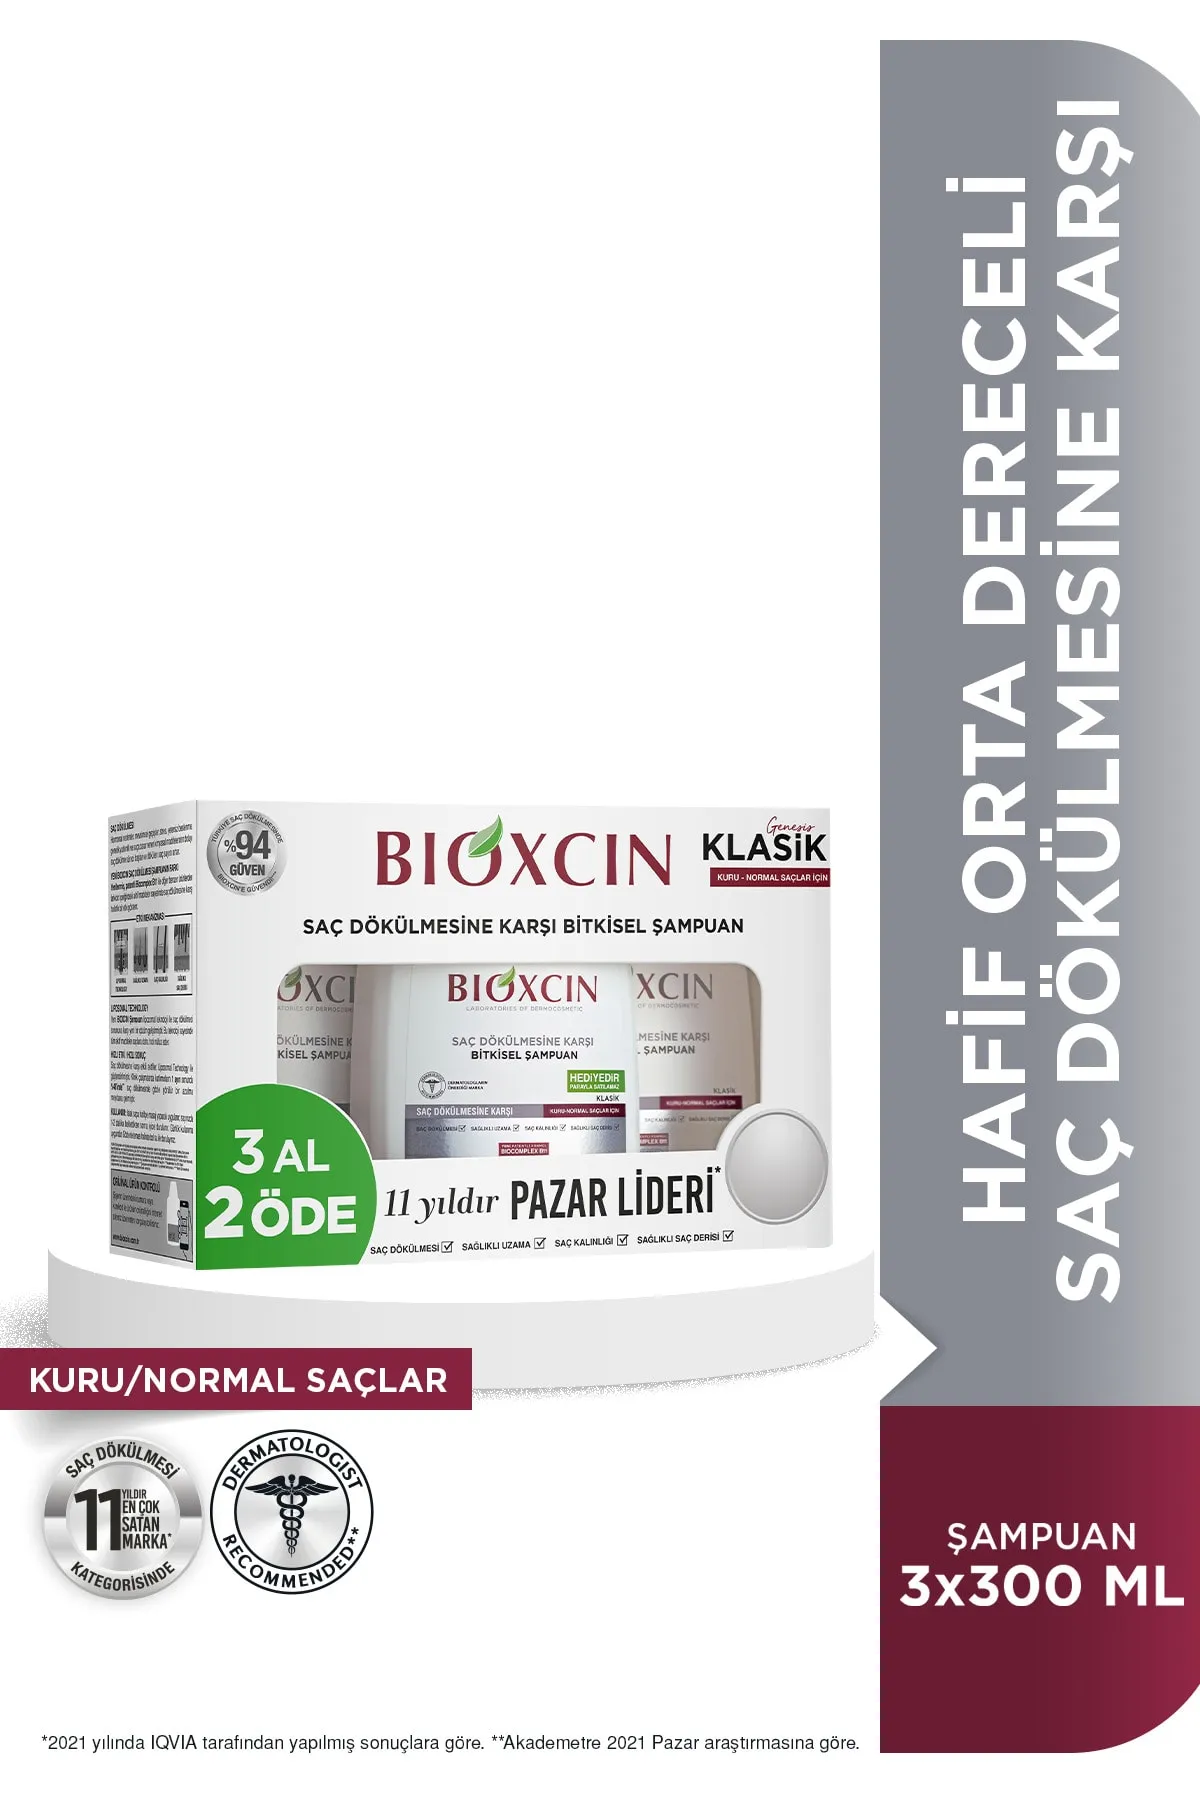 Bioxcin Genesis Şampuan 3 Al 2 Öde Kuru / Normal Saçlar - 1